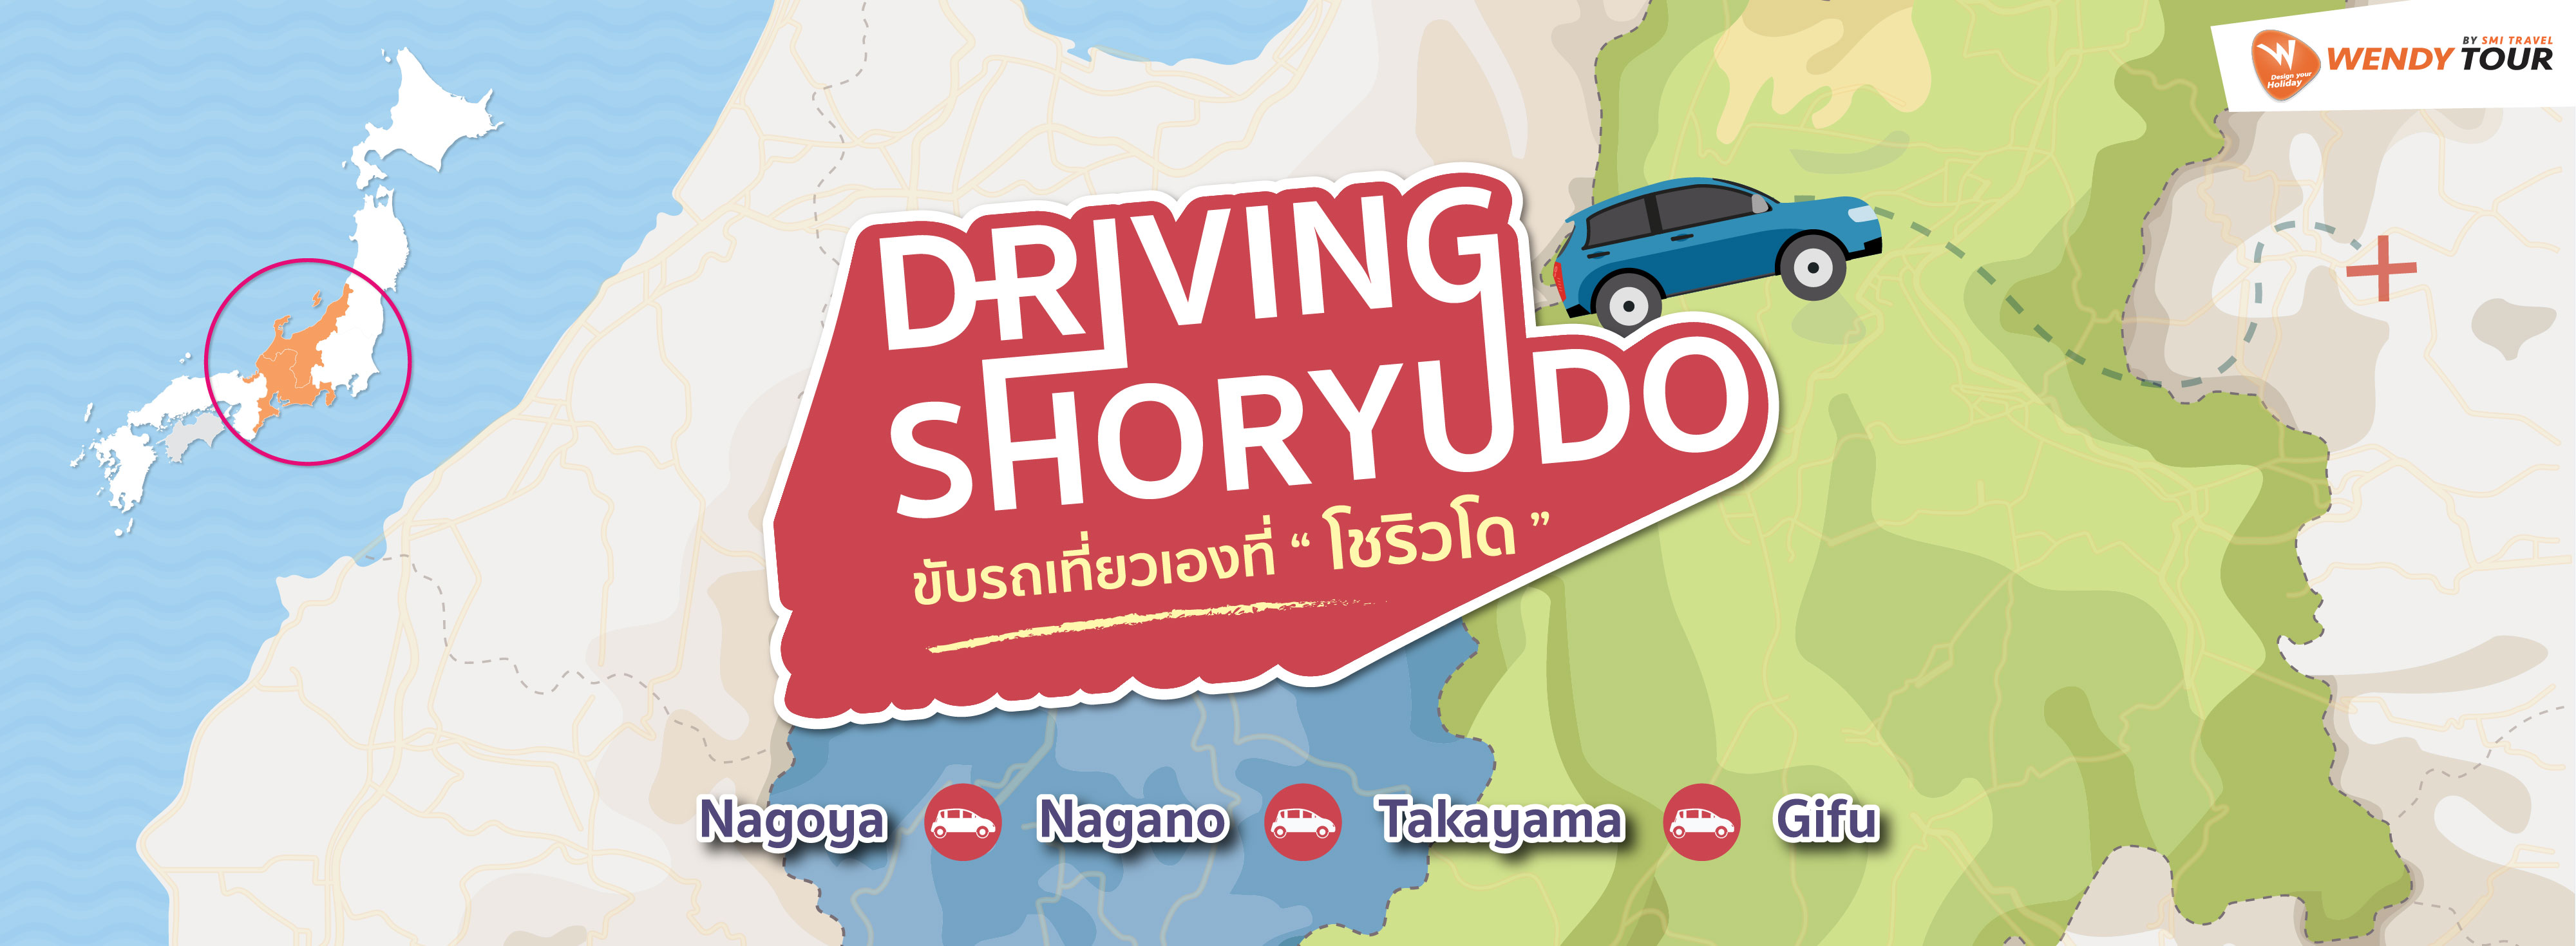 Shoryudo Self Drive ขับรถเที่ยงเอง 4 เส้นทาง Nagoya, Nagano, Takayama, Gifu